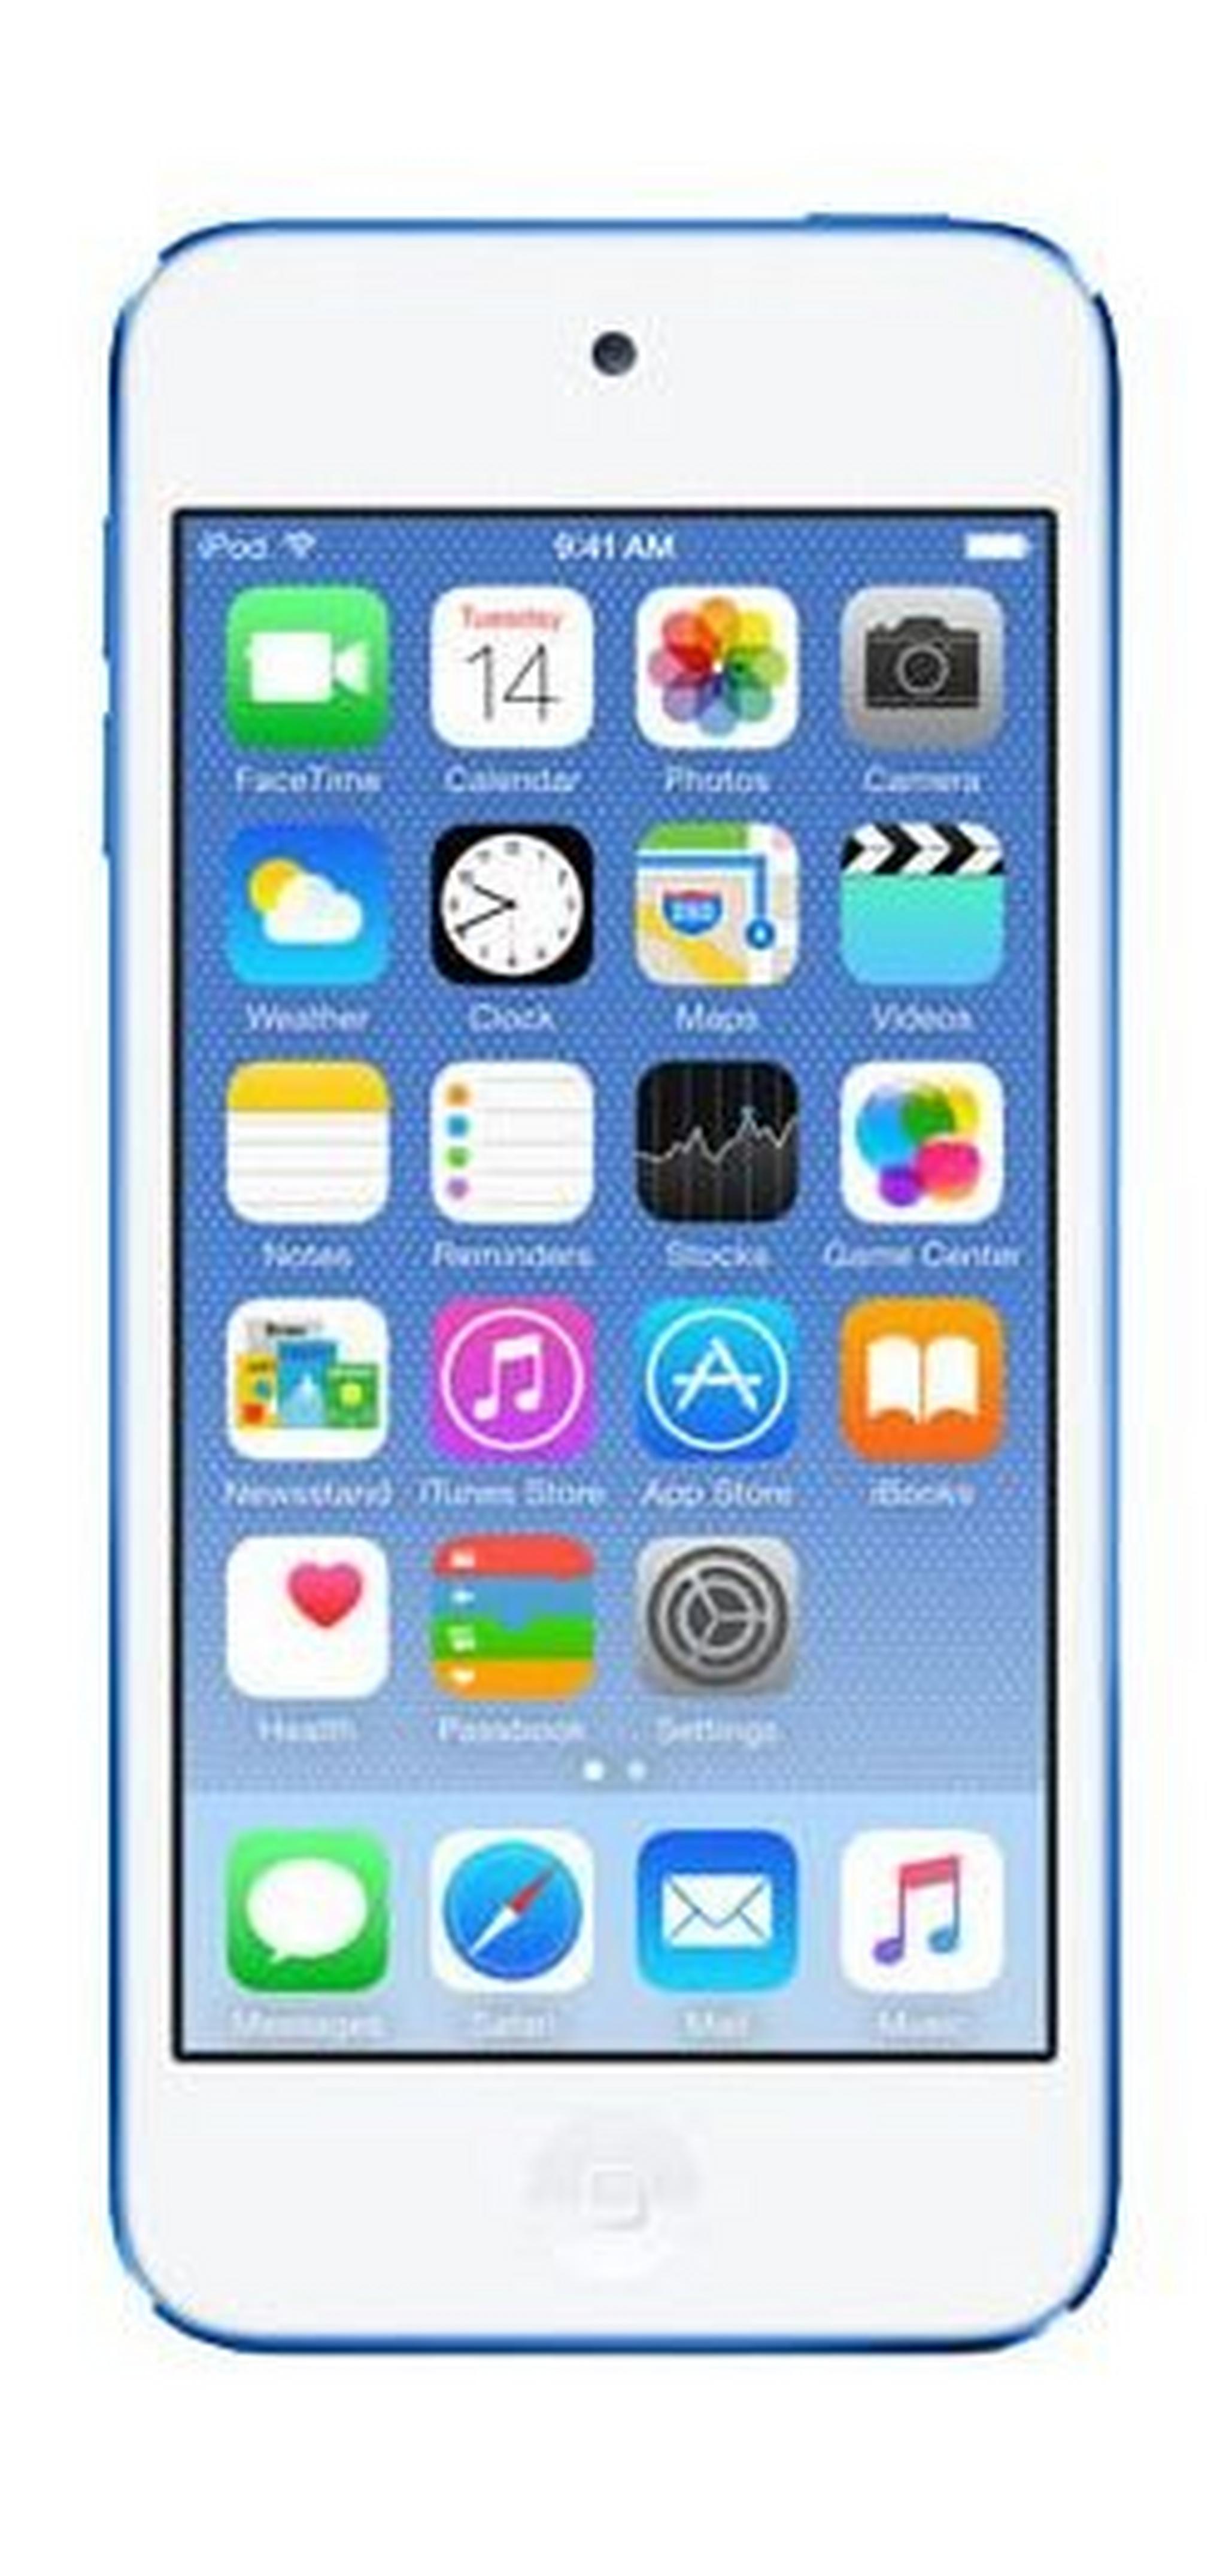 Apple iPod Touch 32GB 6th Gen - Blue MKHV2LL/A